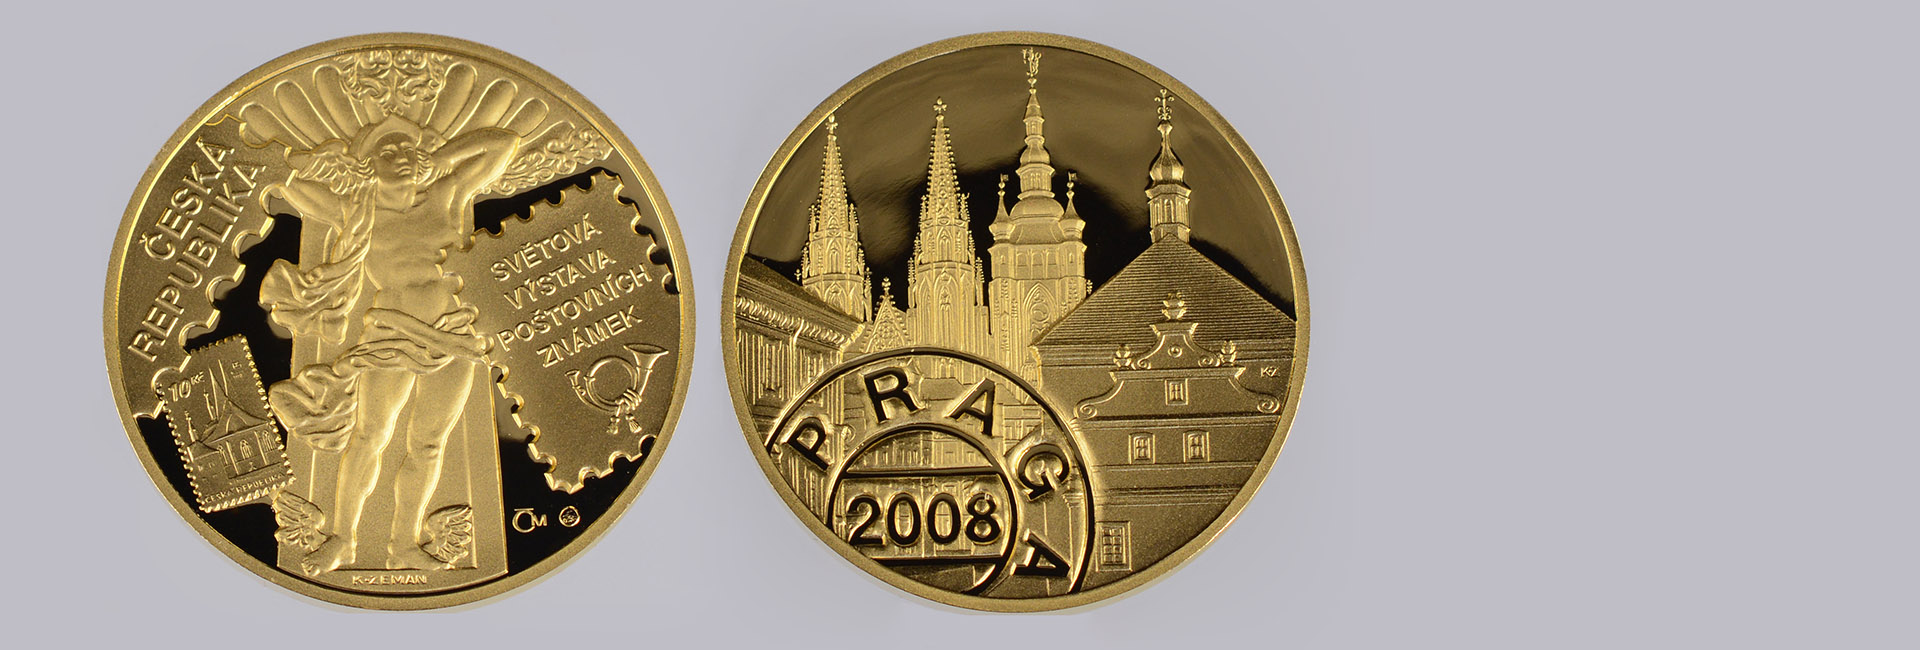 Gold medal PRAGA 2008|THE BUYER PREMIUM IN THIS AUCTION JUST 5%| [Karel Zeman (1949)]